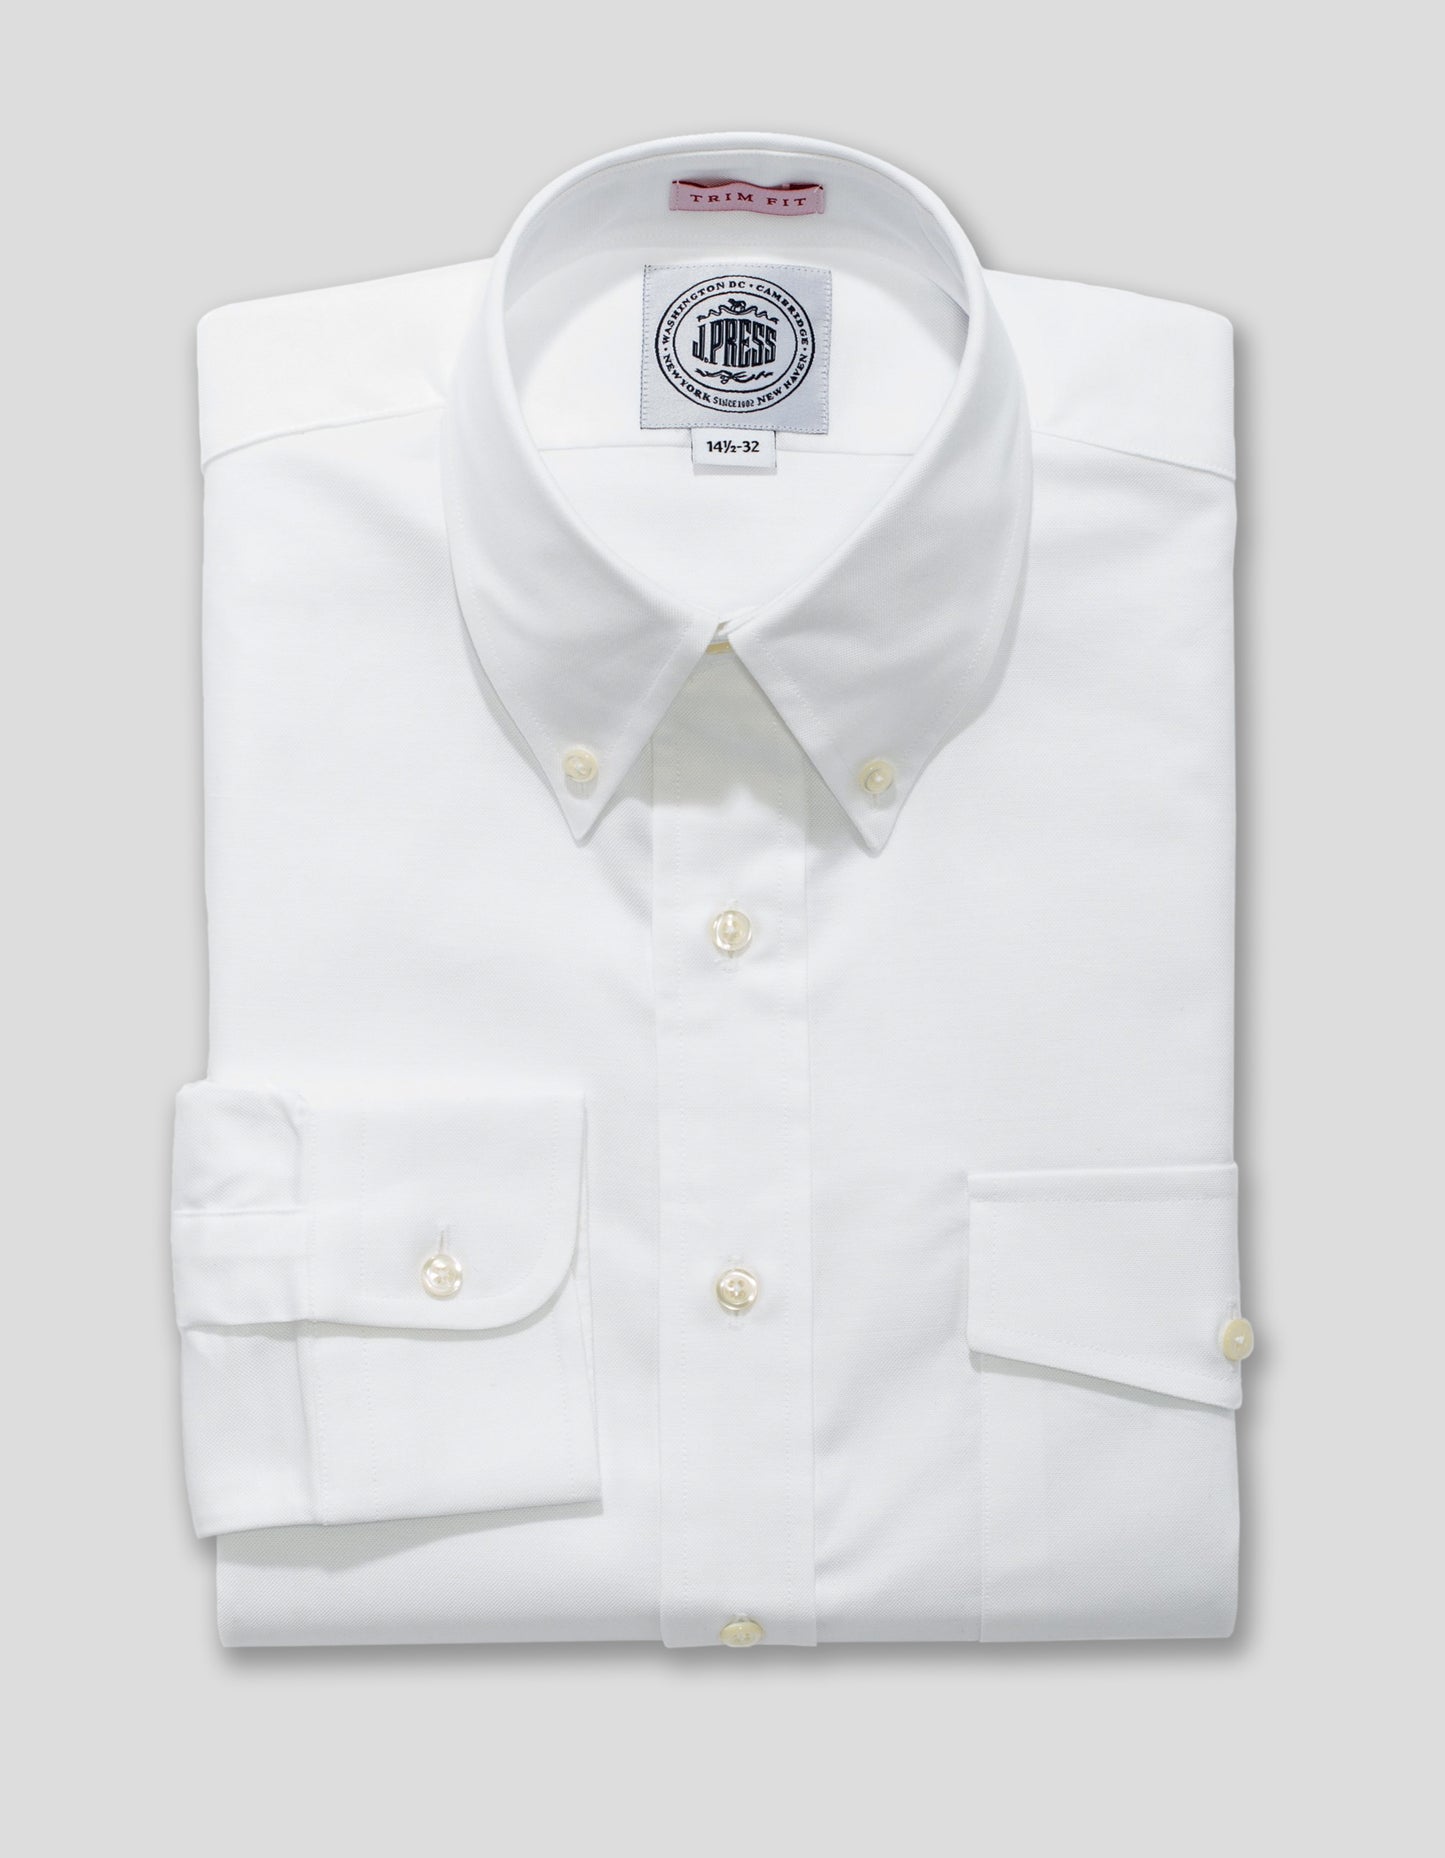 WHITE OXFORD DRESS SHIRT WITH FLAP POCKET - TRIM FIT